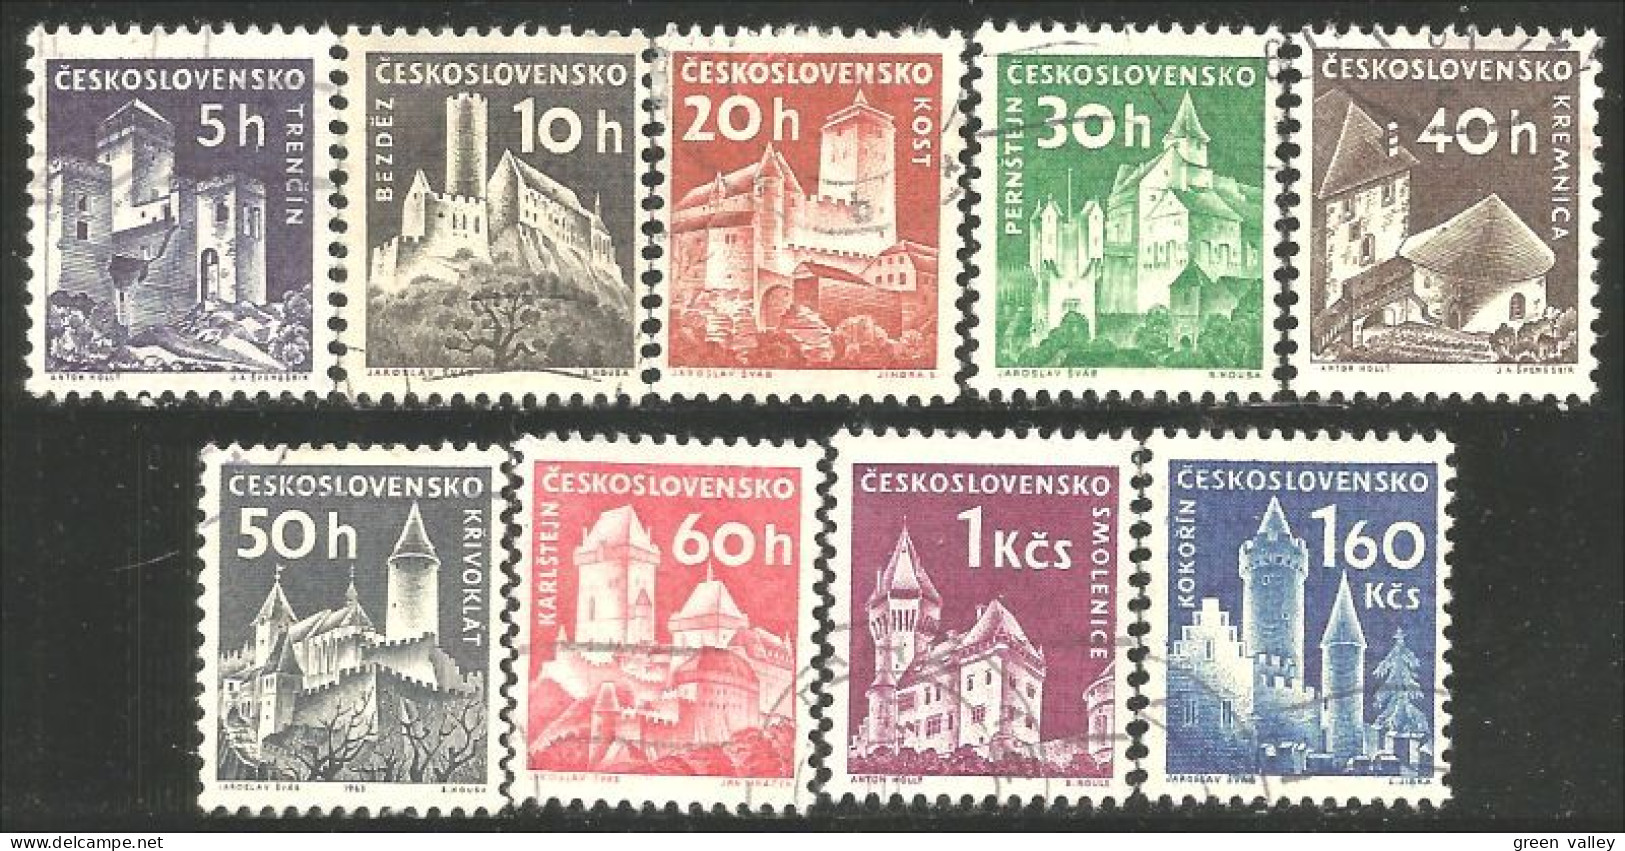 290 Czechoslovakia 1960-63 Chateaux Castles (CZE-268b) - Used Stamps